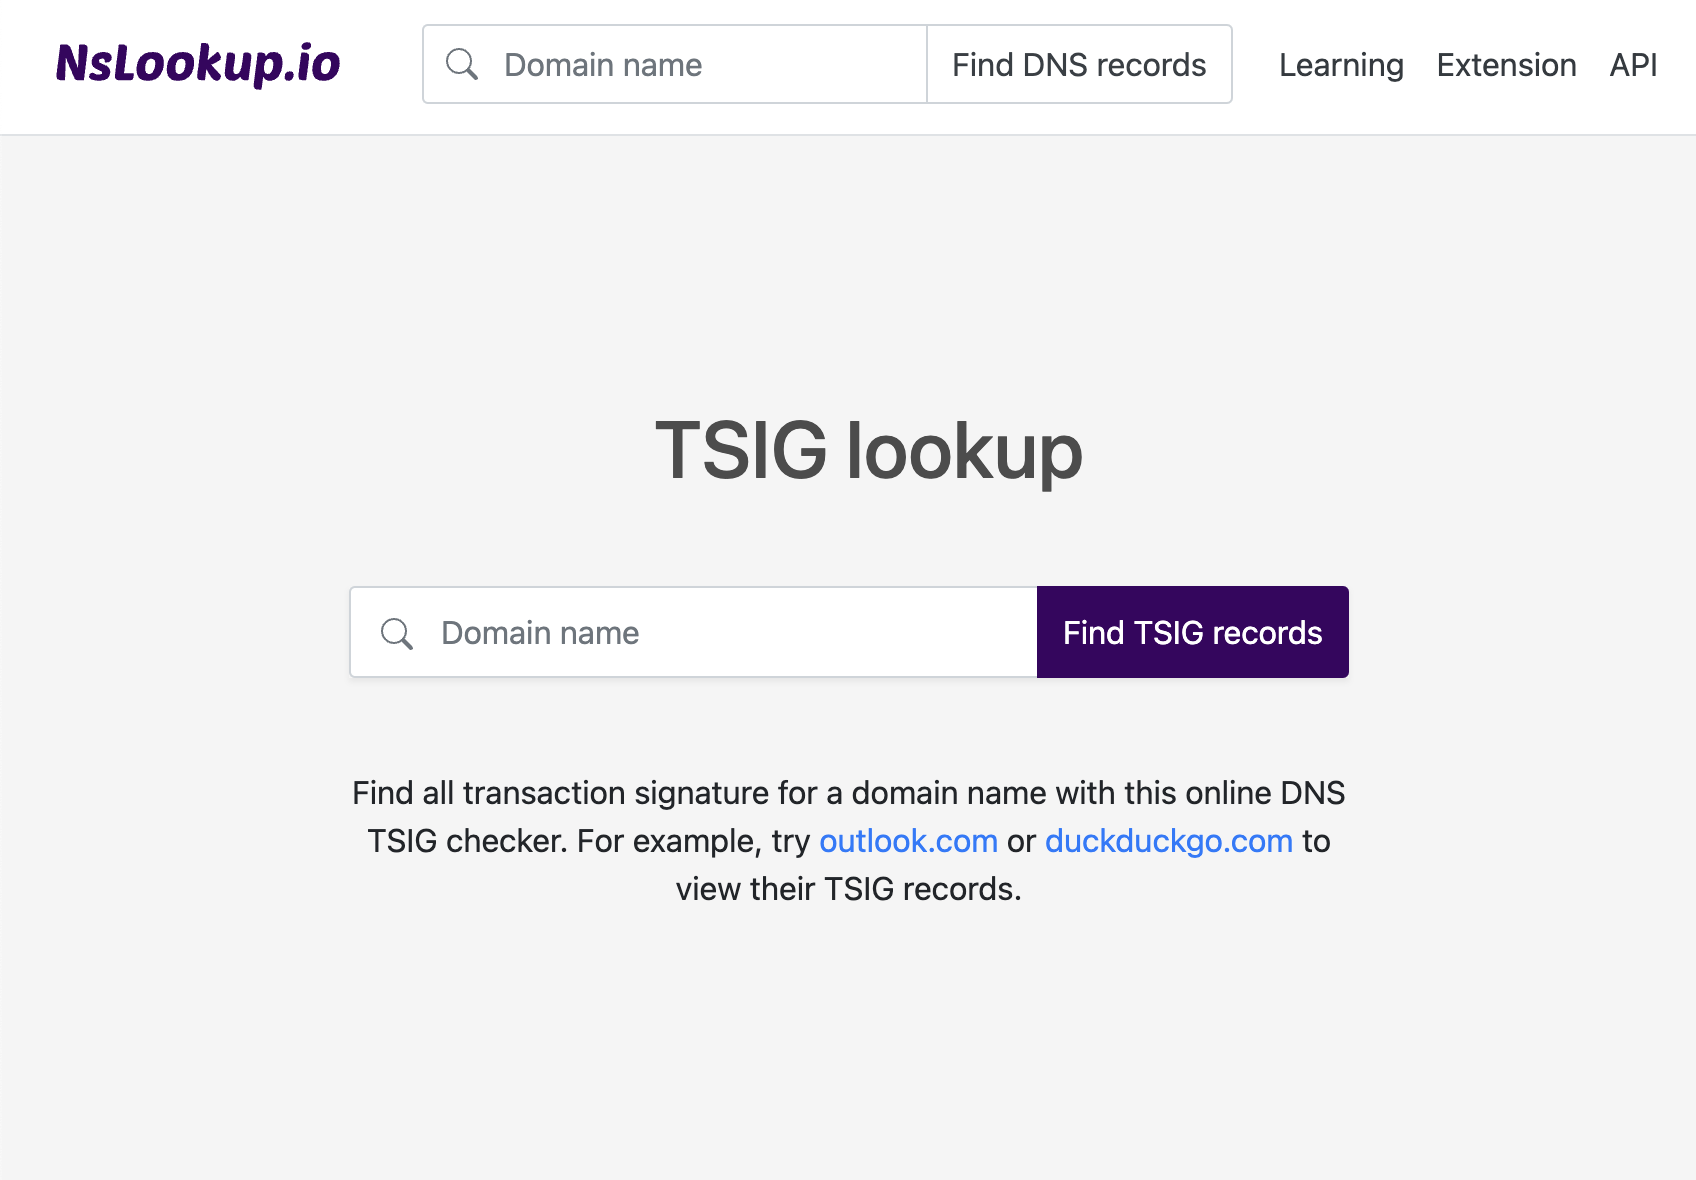 Open the TSIG lookup tool